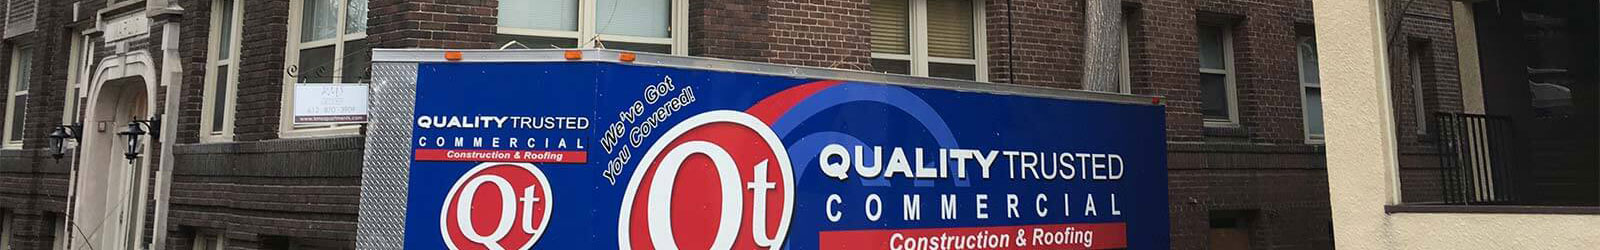 QT Commercial Building Repairs Banner Image